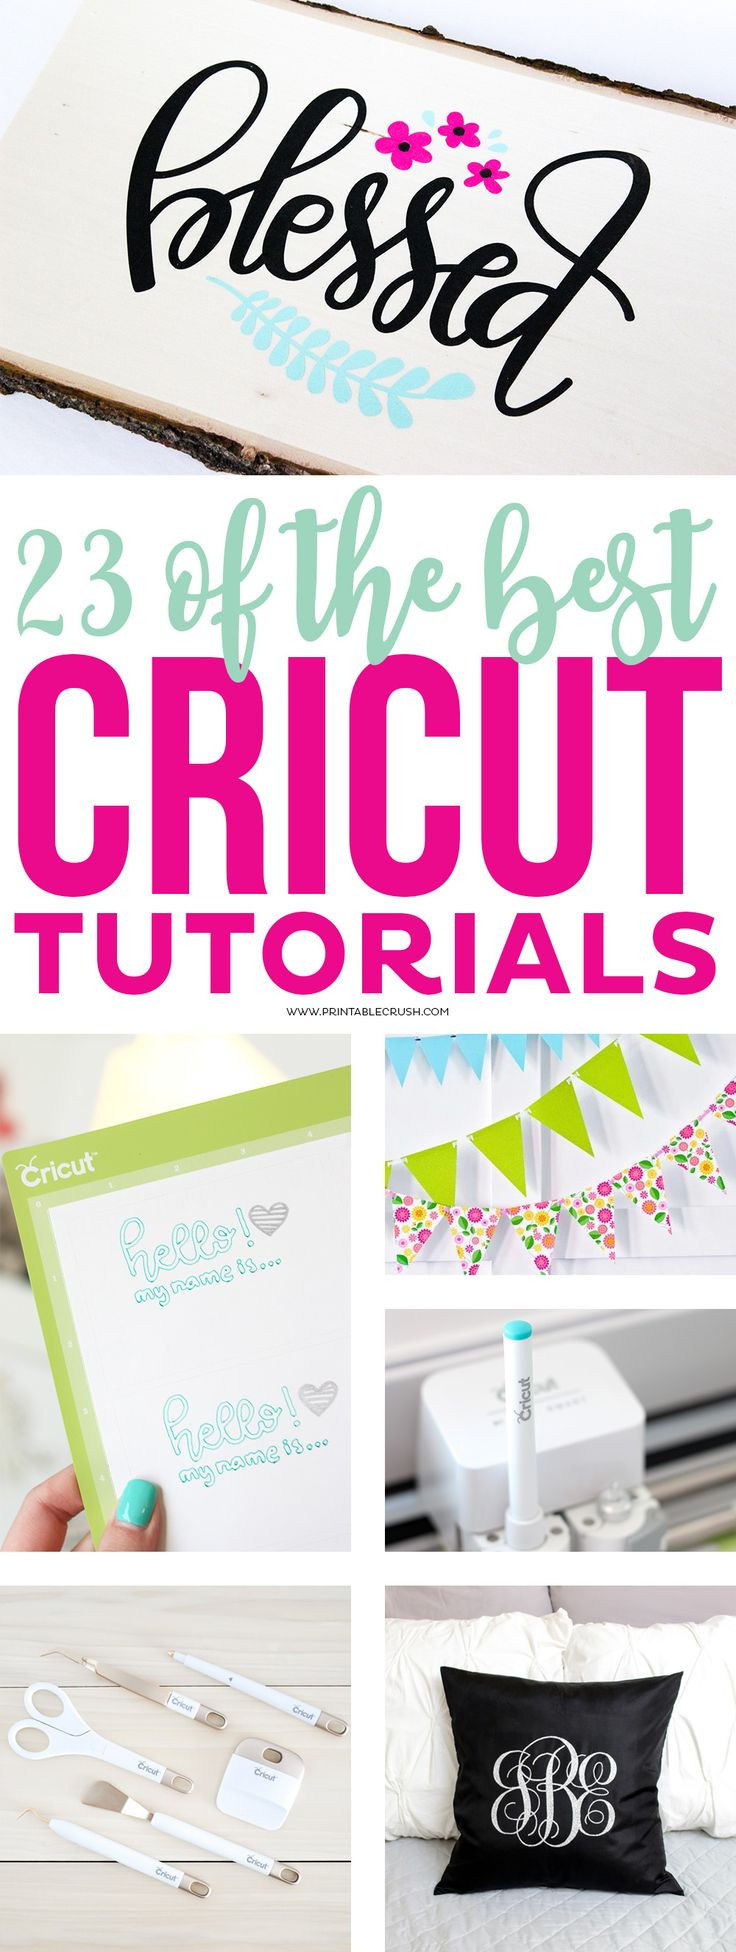 Best ideas about Cricut Craft Ideas
. Save or Pin 25 fantastiske idéer til Cricut på Pinterest Now.